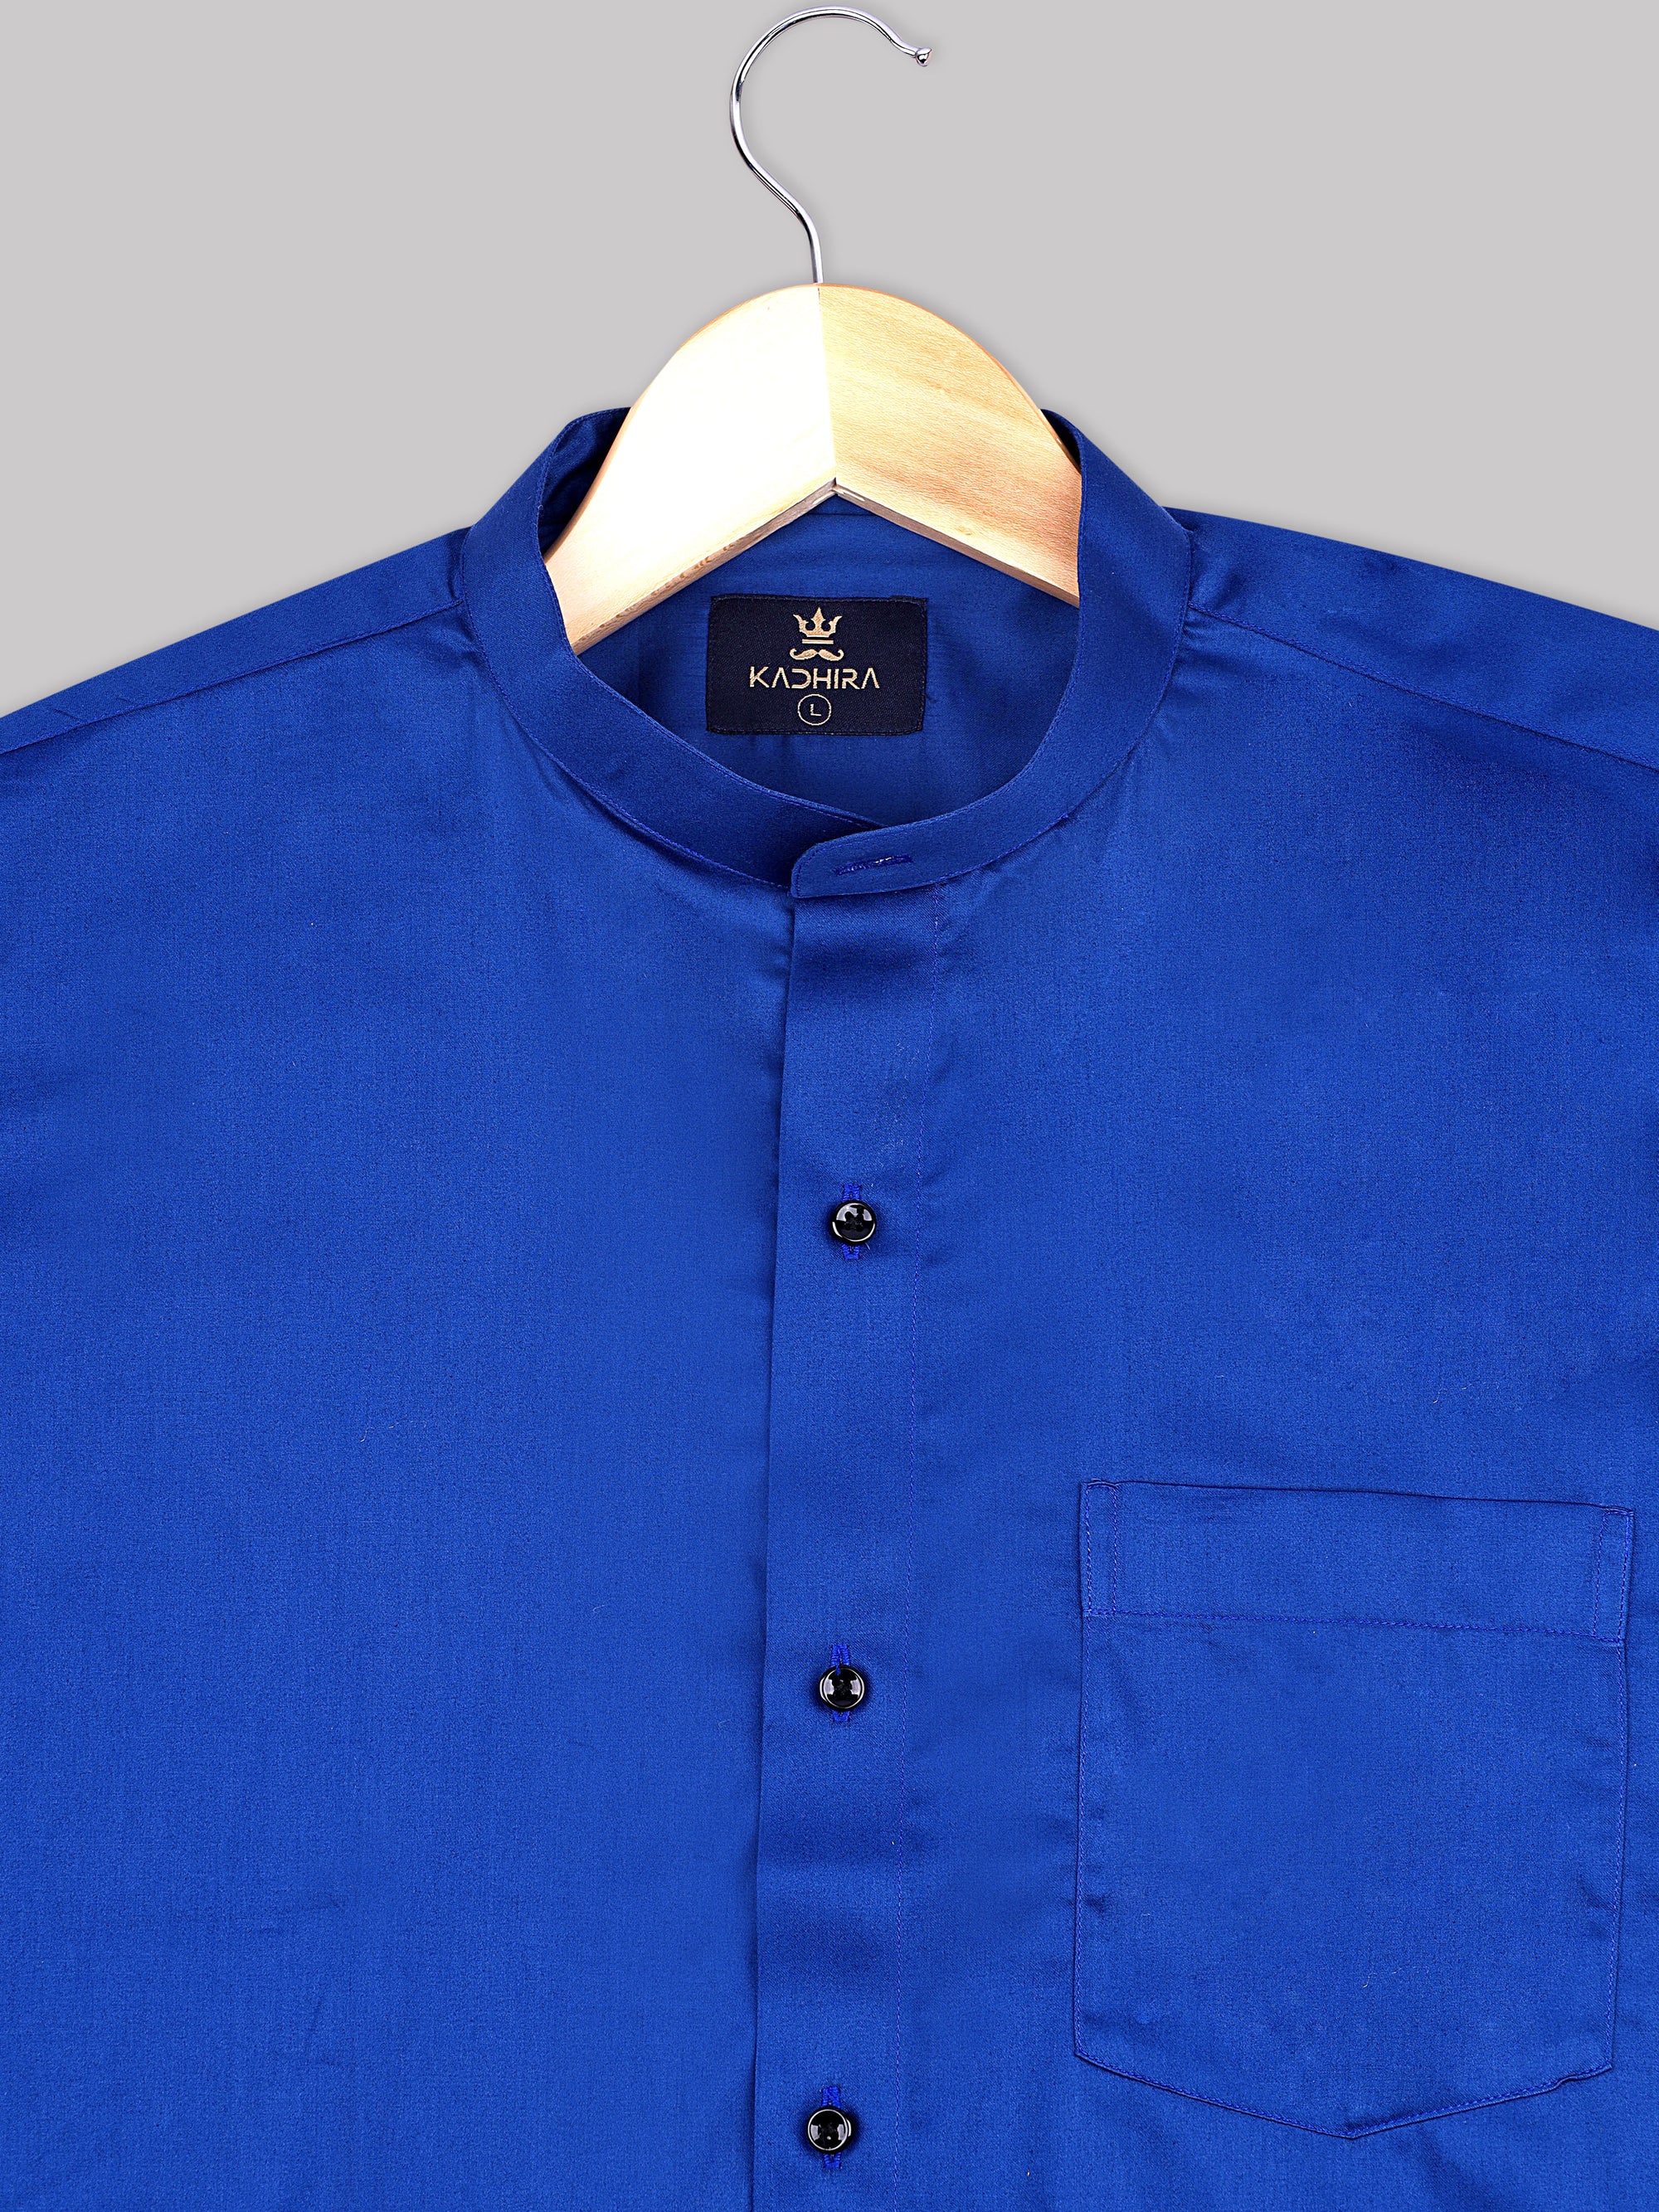 Indigo Blue Subtle Sheen Super Soft Premium Cotton Shirt